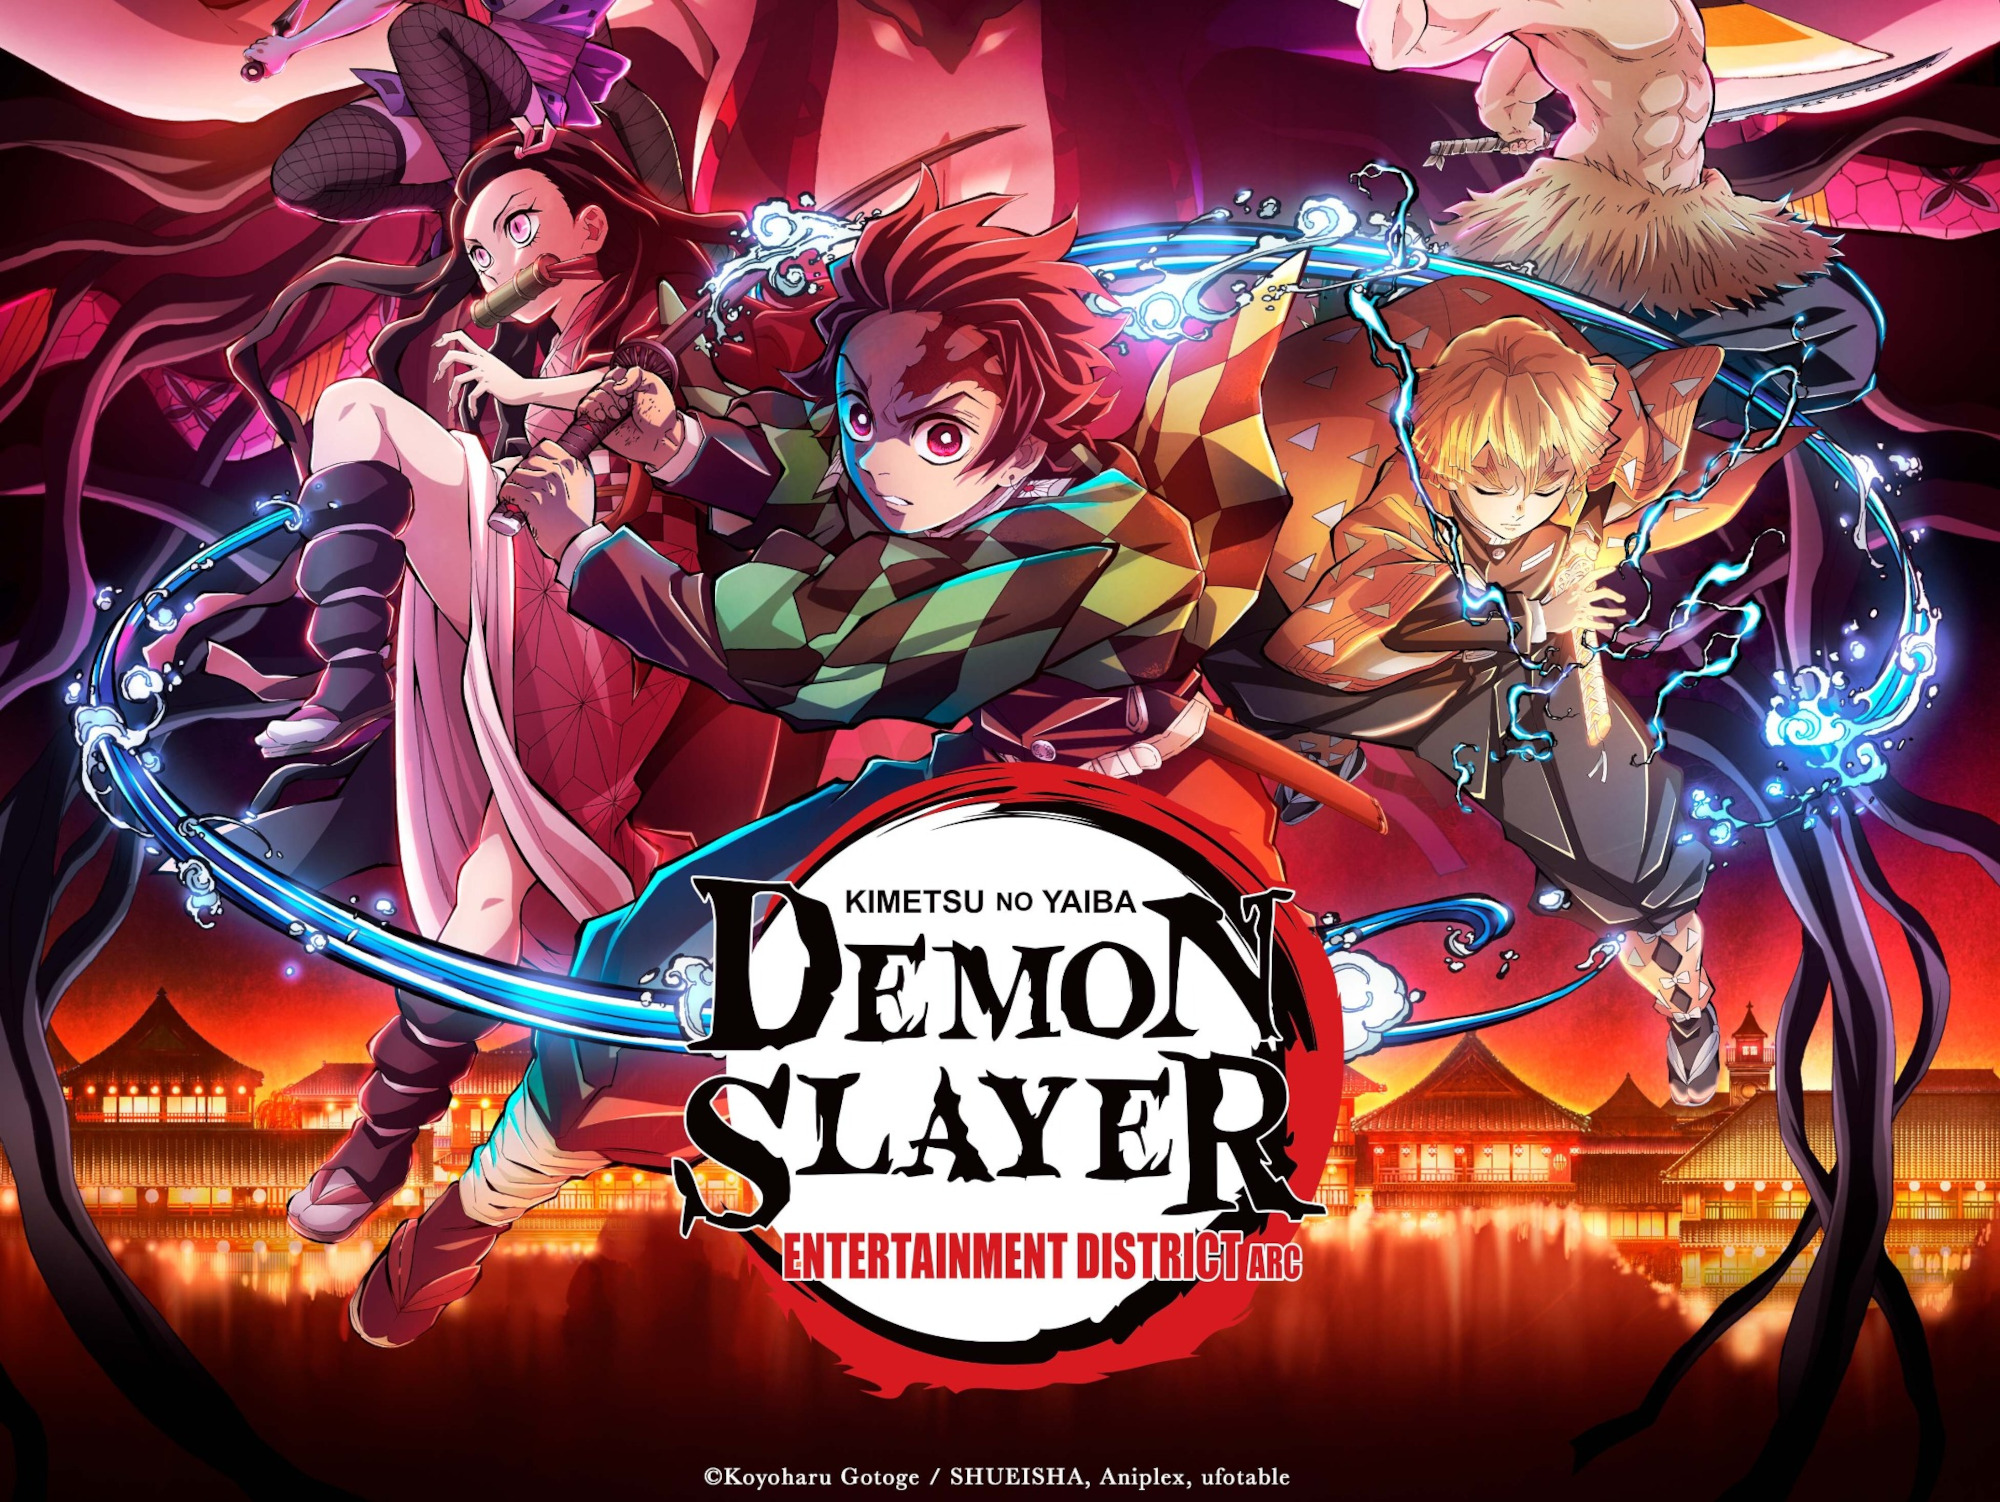 Demon Slayer season two entertainment district